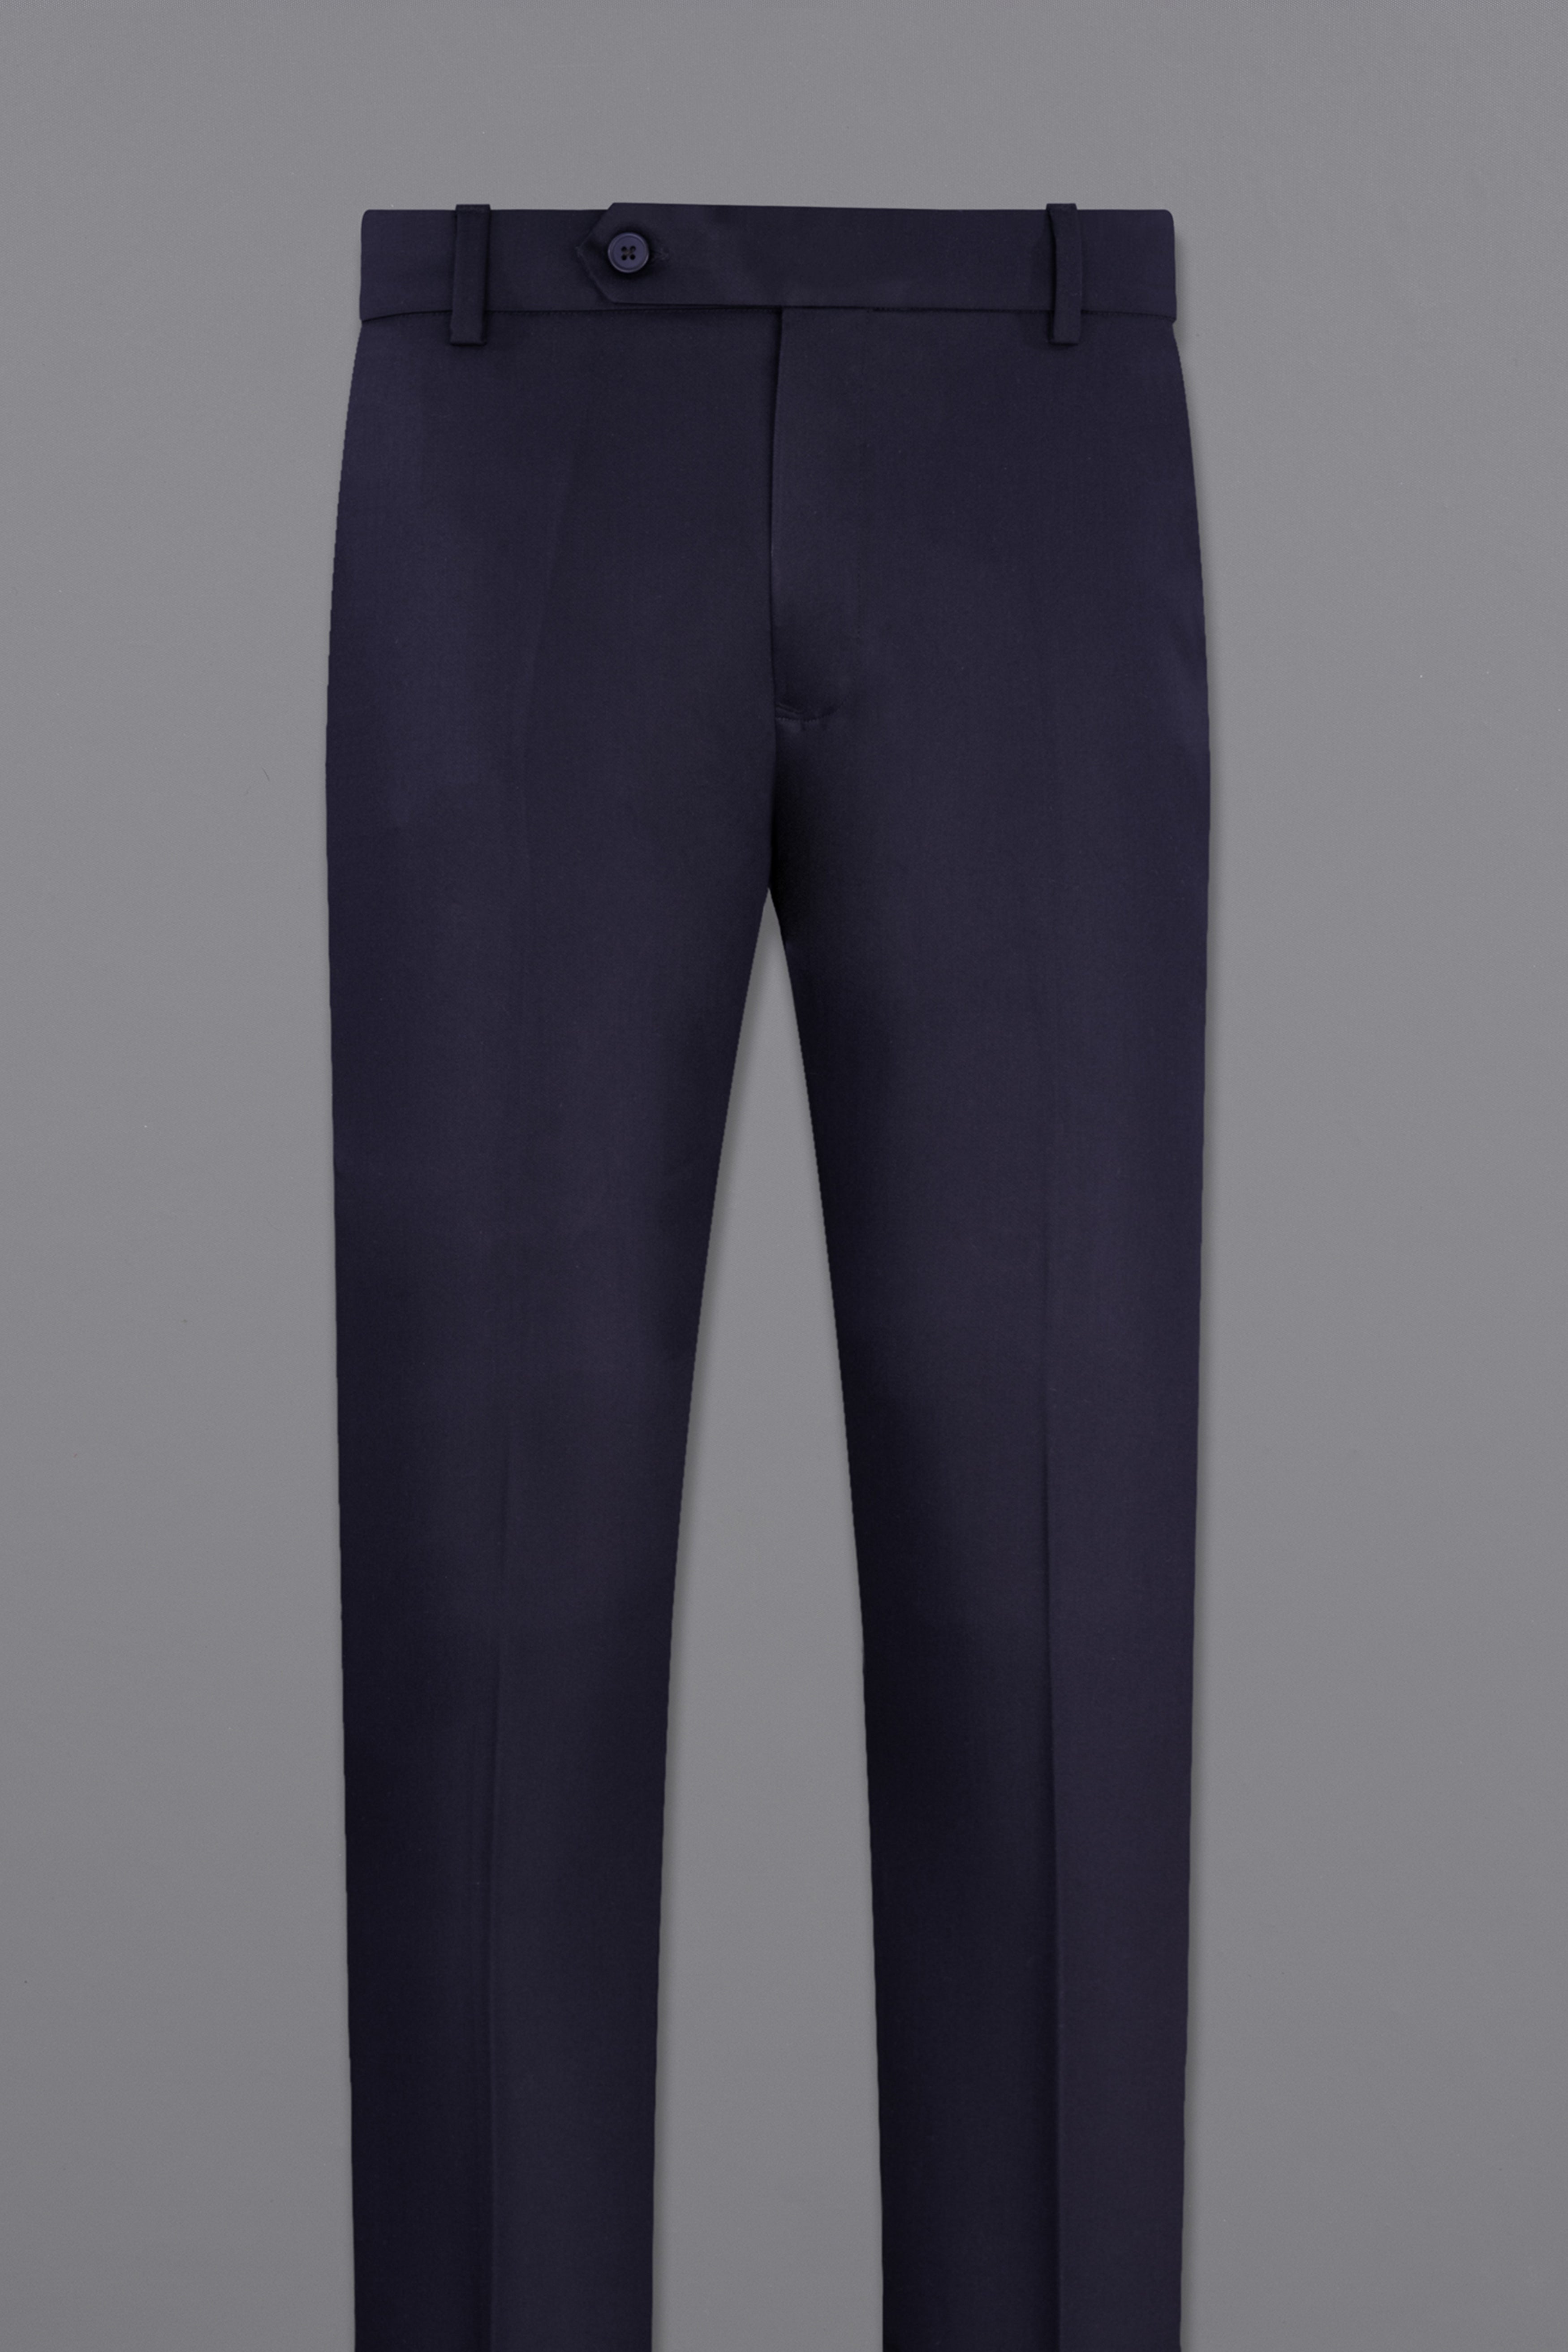 Mirage Navy Blue Textured Pant